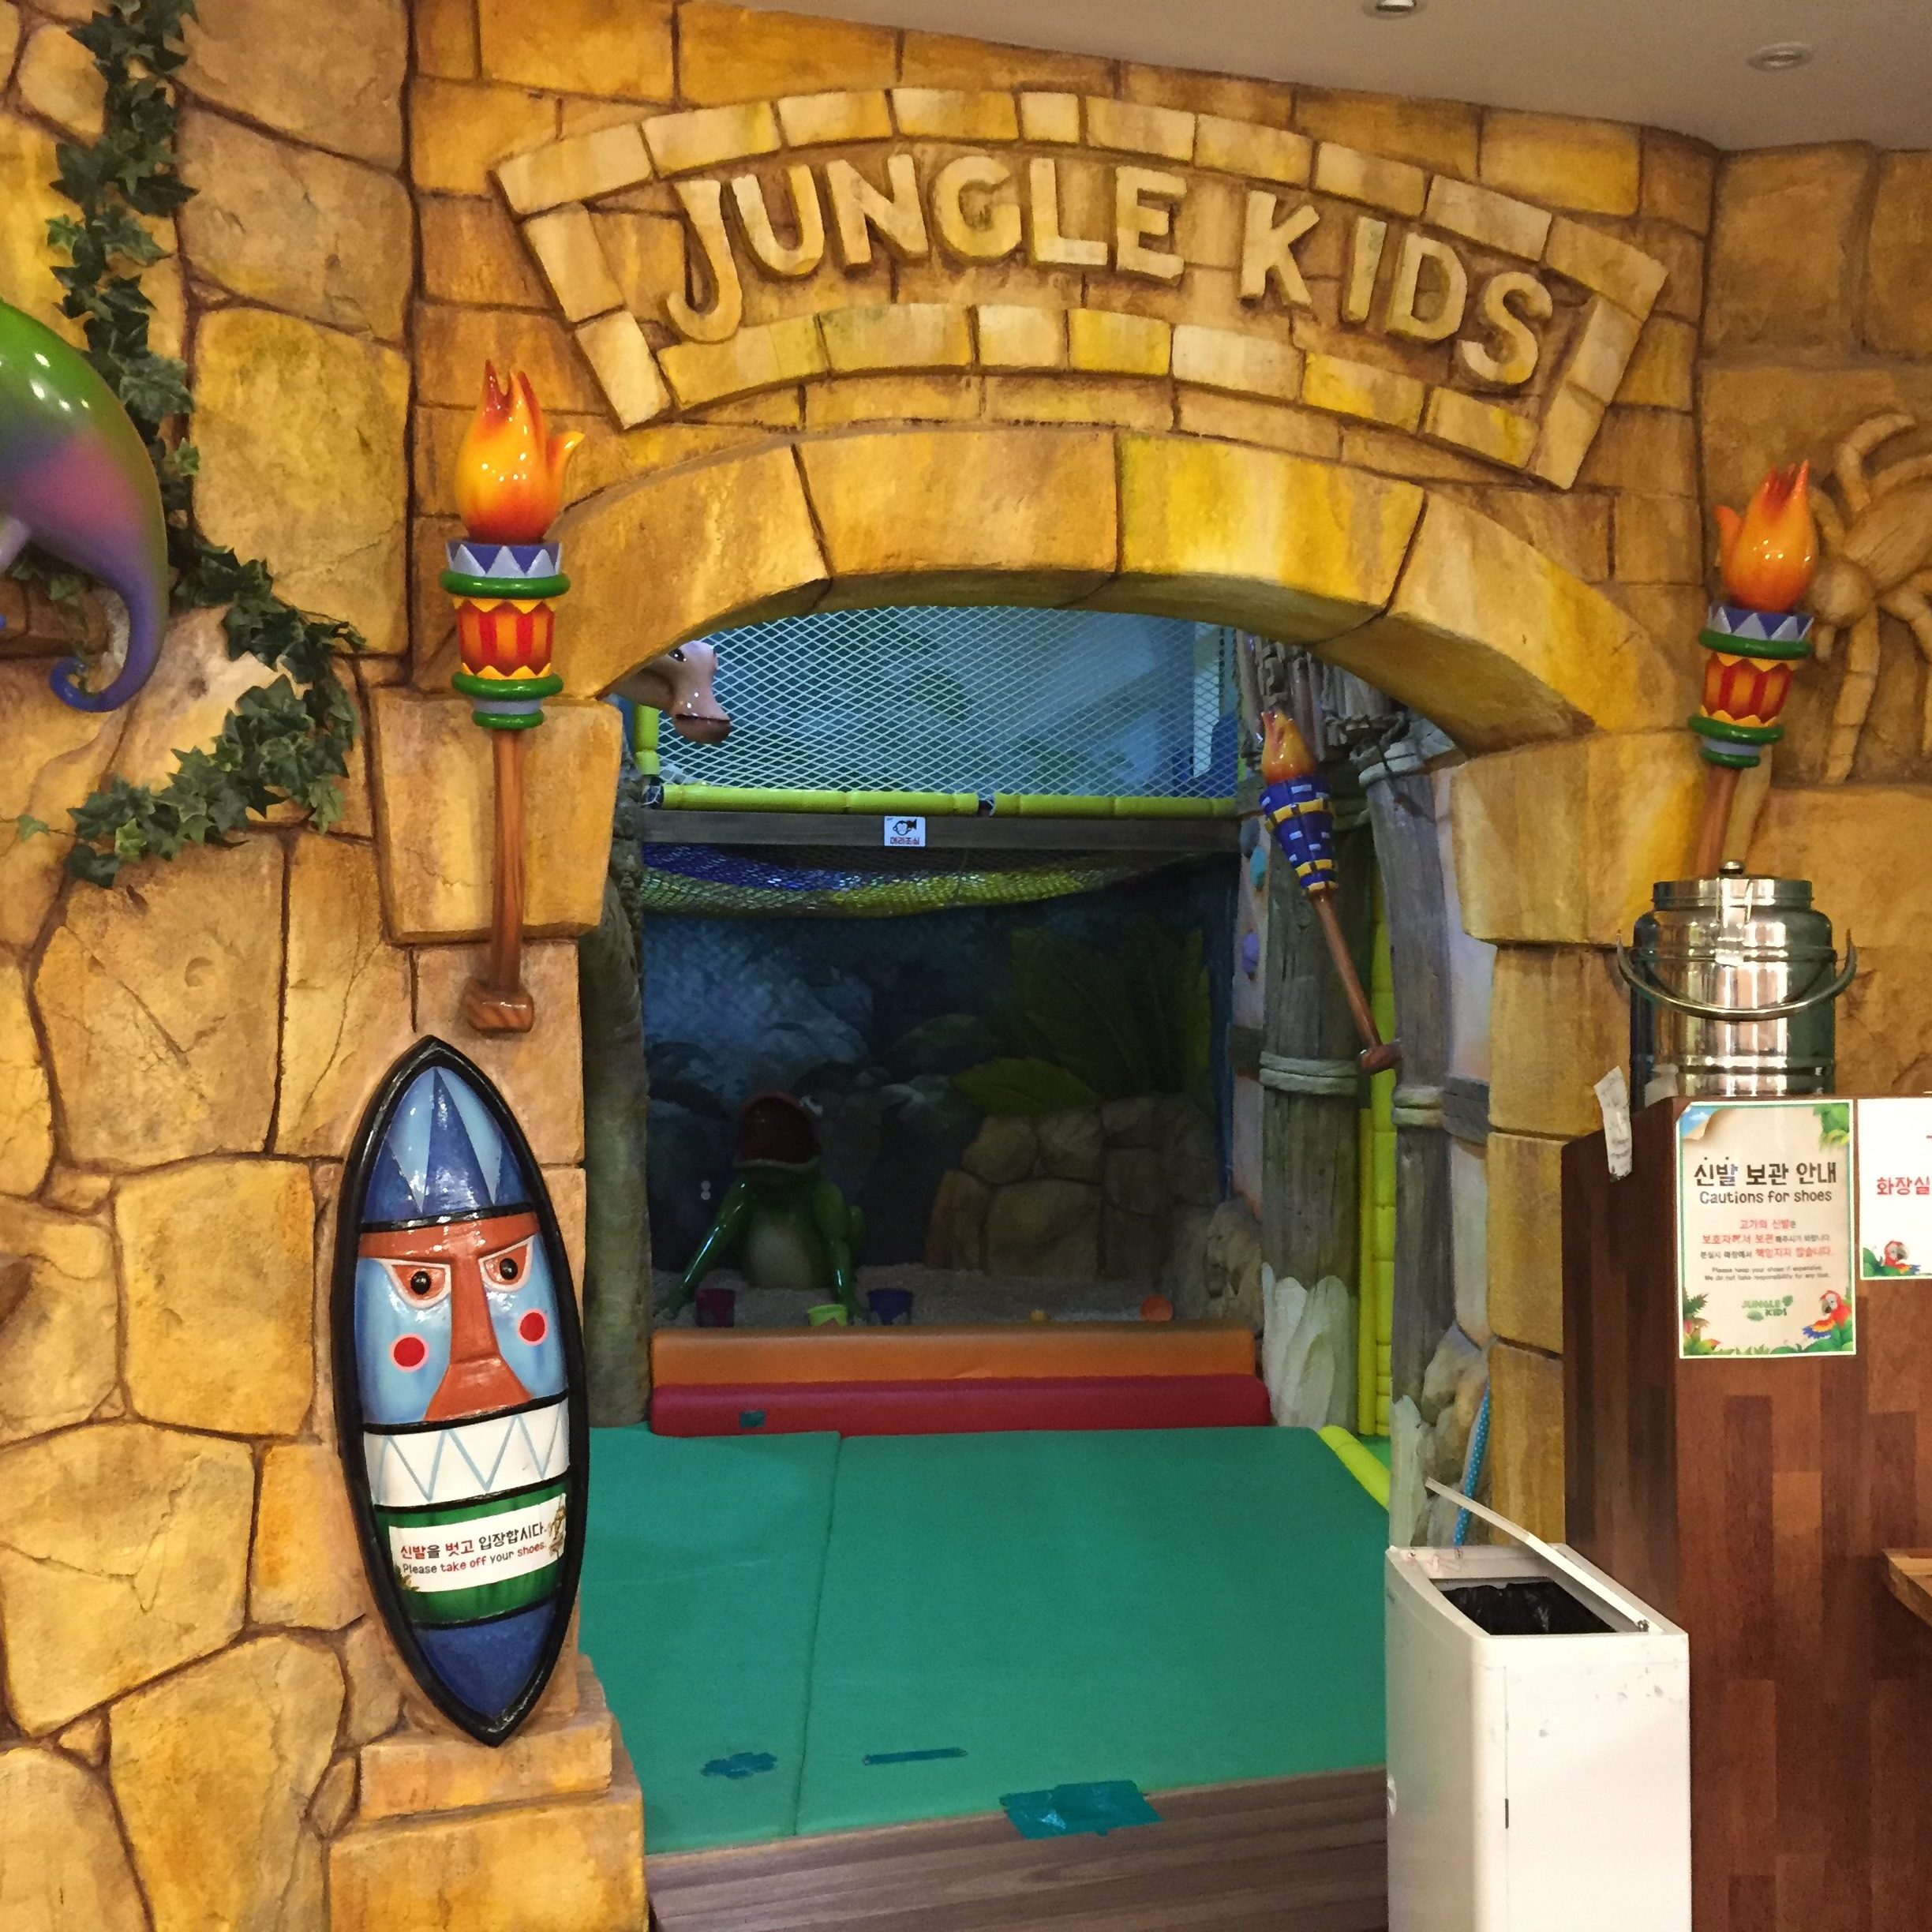 Jungle Kids Cafe at Seoul - The Entrance